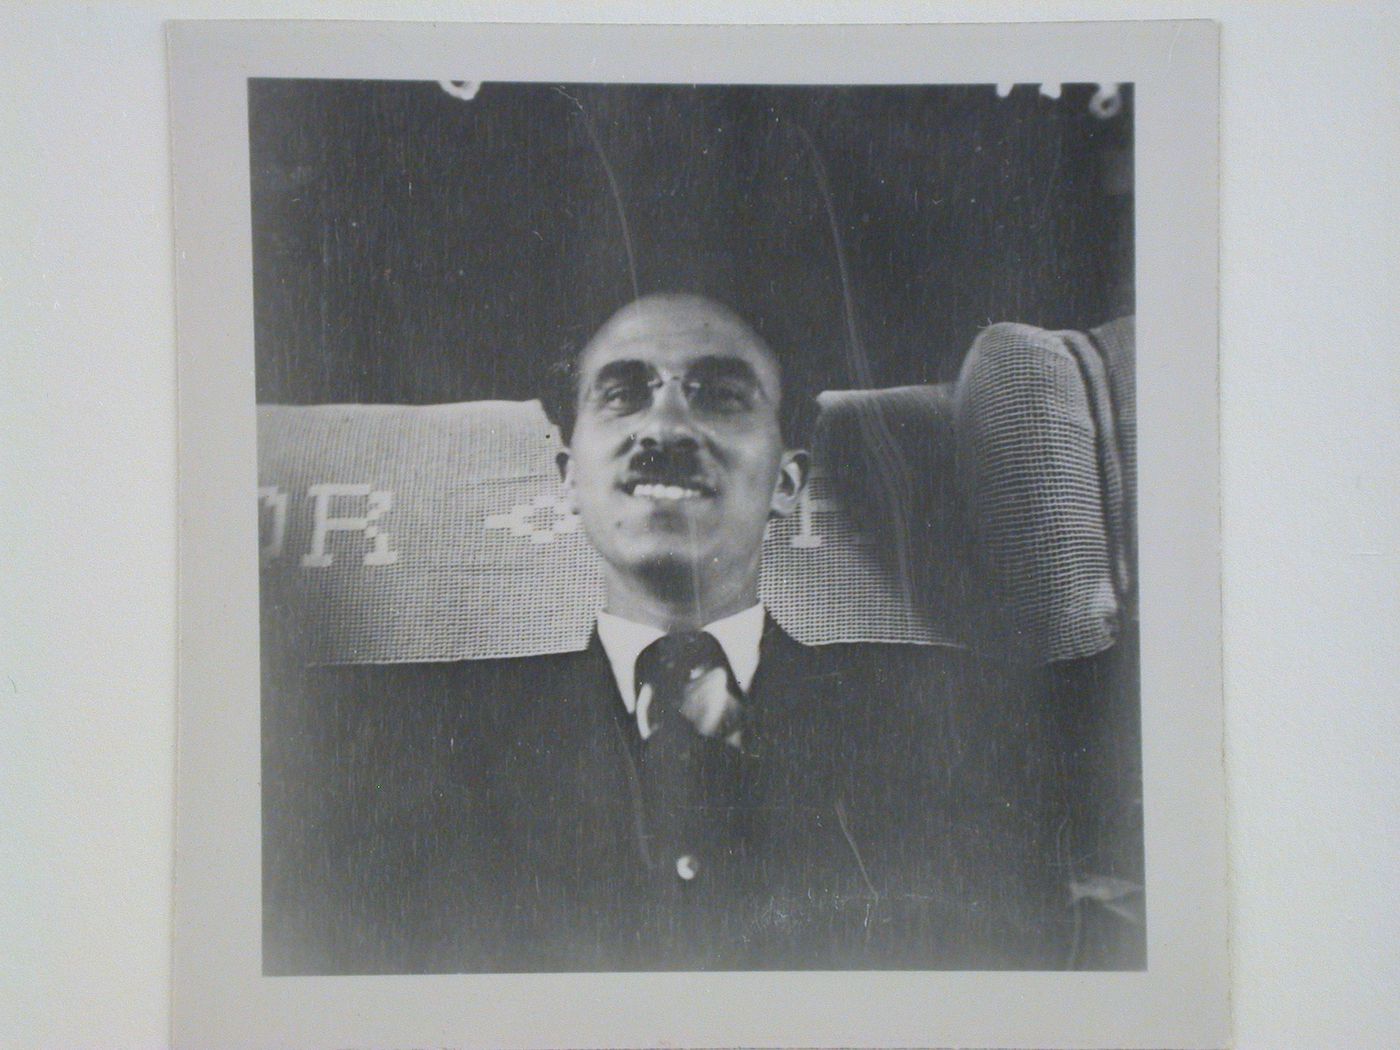 Portrait of André Bloc, editor of L'Architecture d'aujourd'hui, in a train car